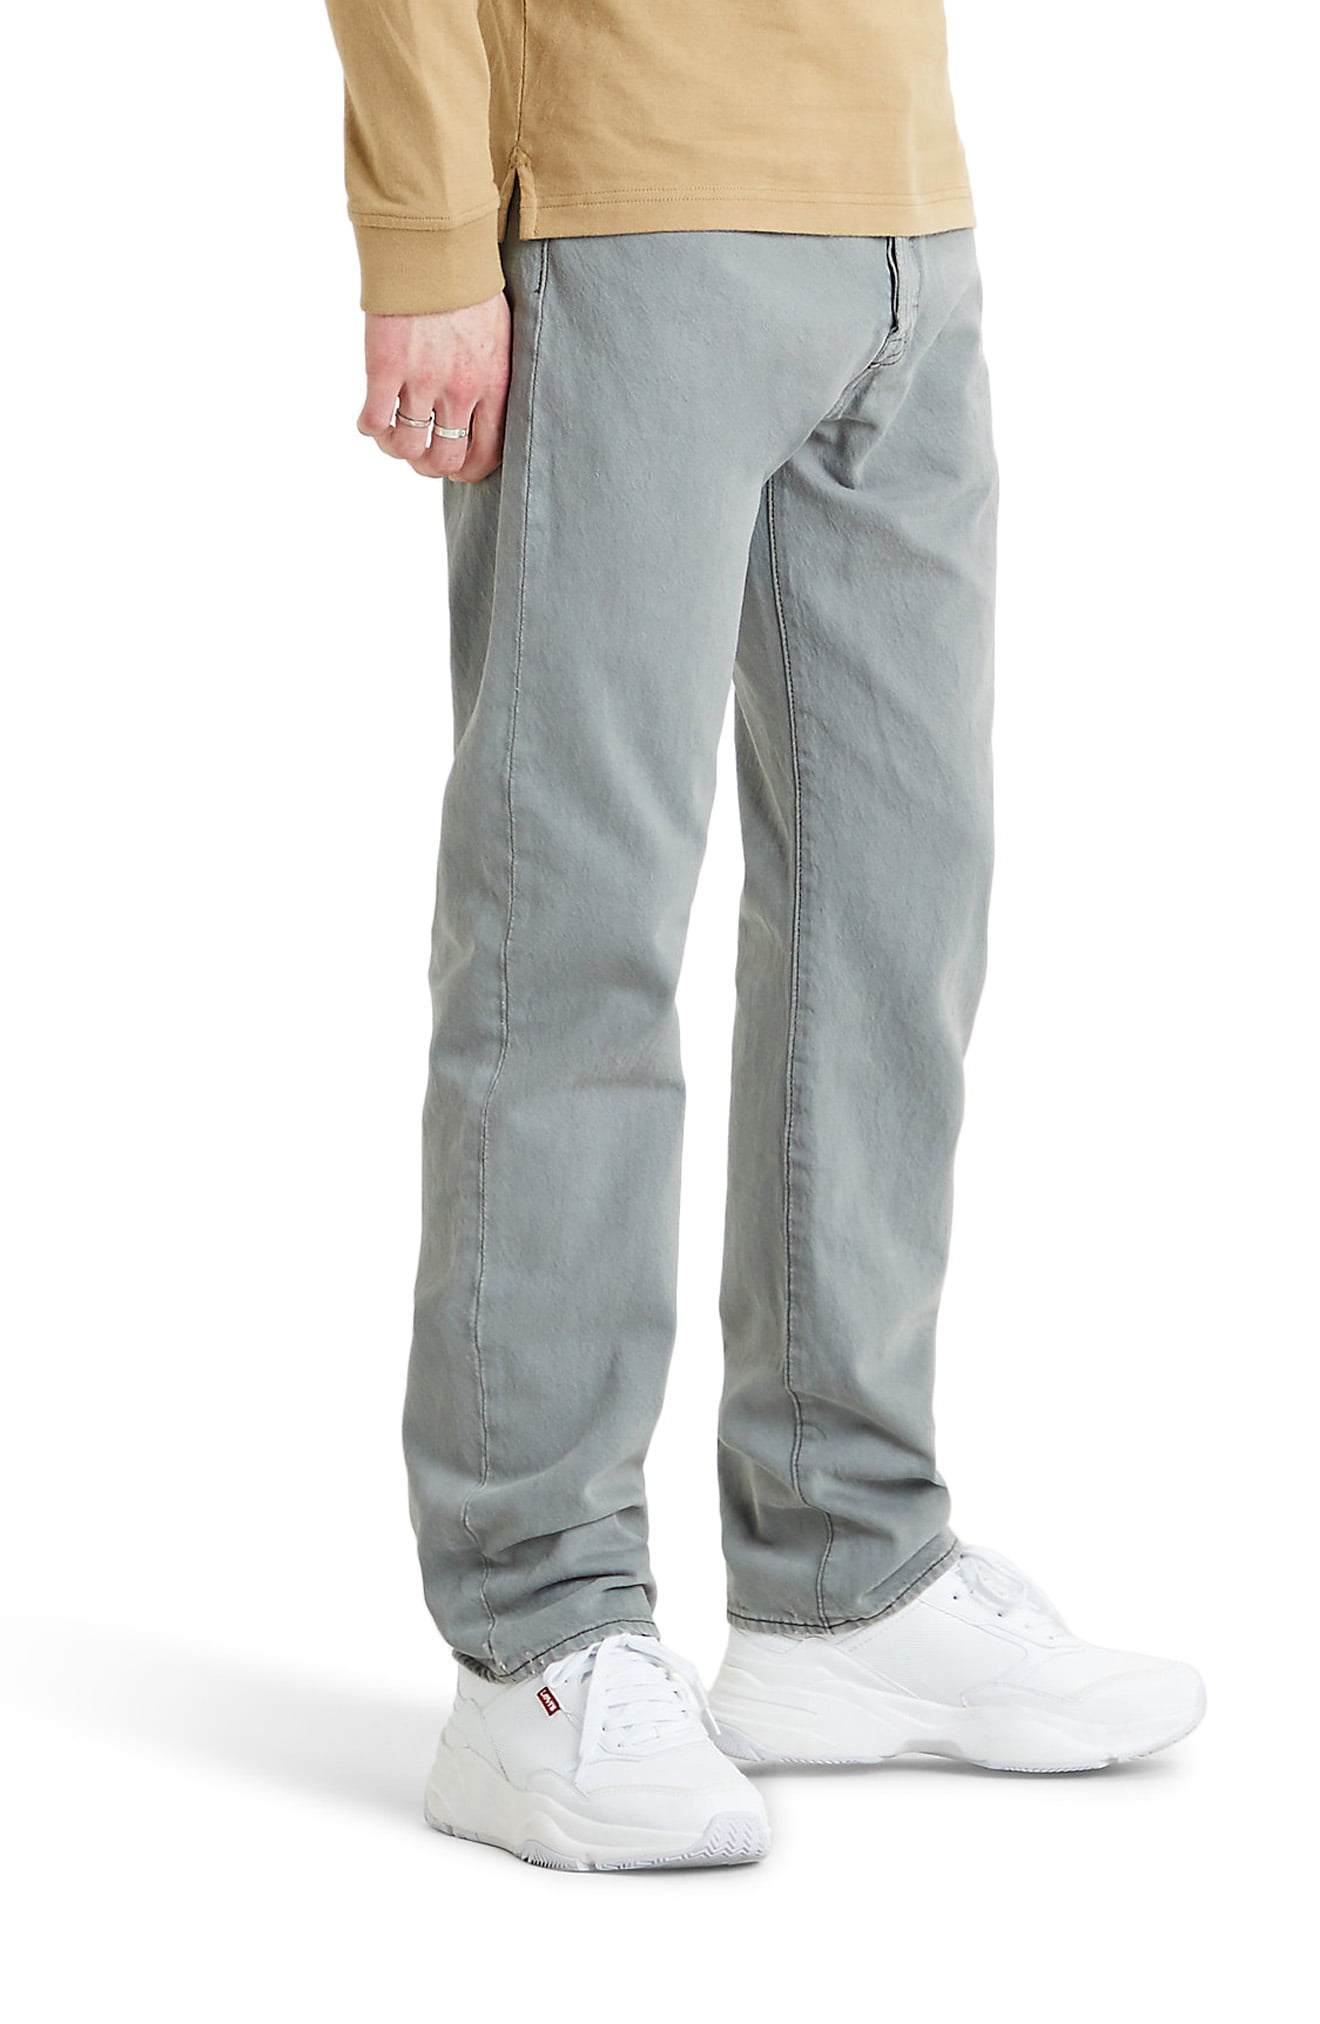 levis 501 mens straight leg jeans